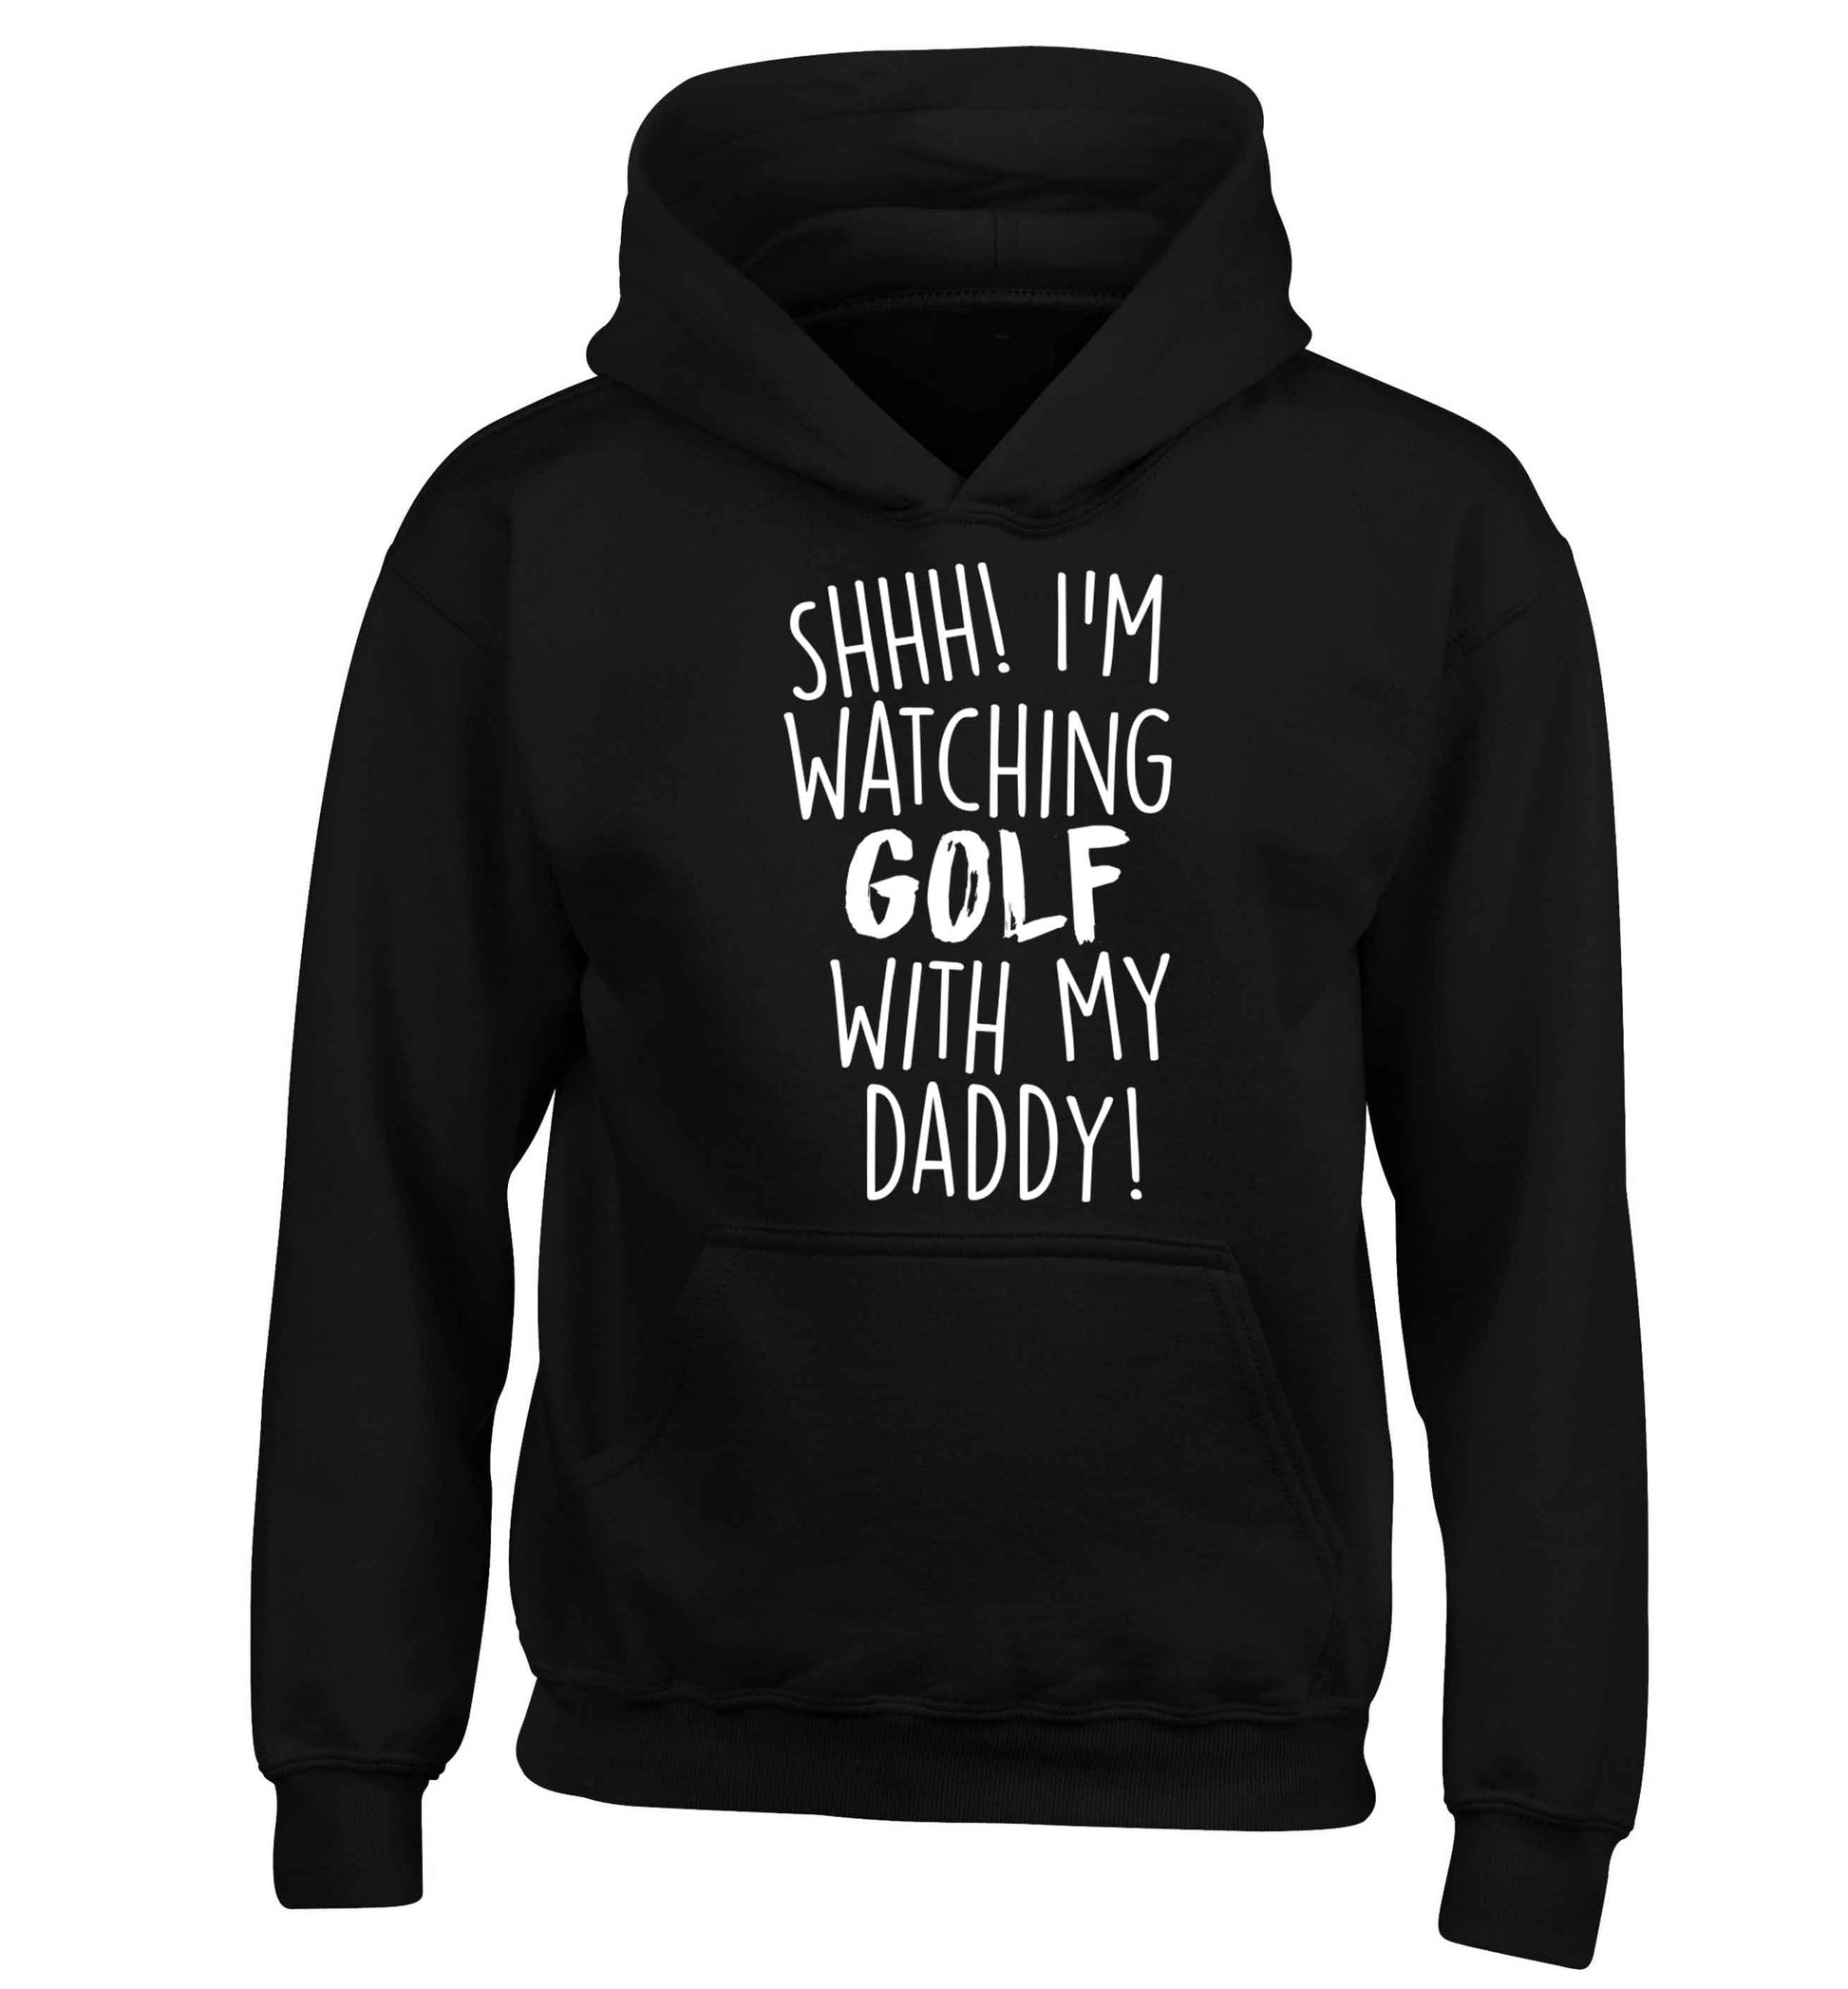 Shh I'm watching golf with my daddy children's black hoodie 12-13 Years